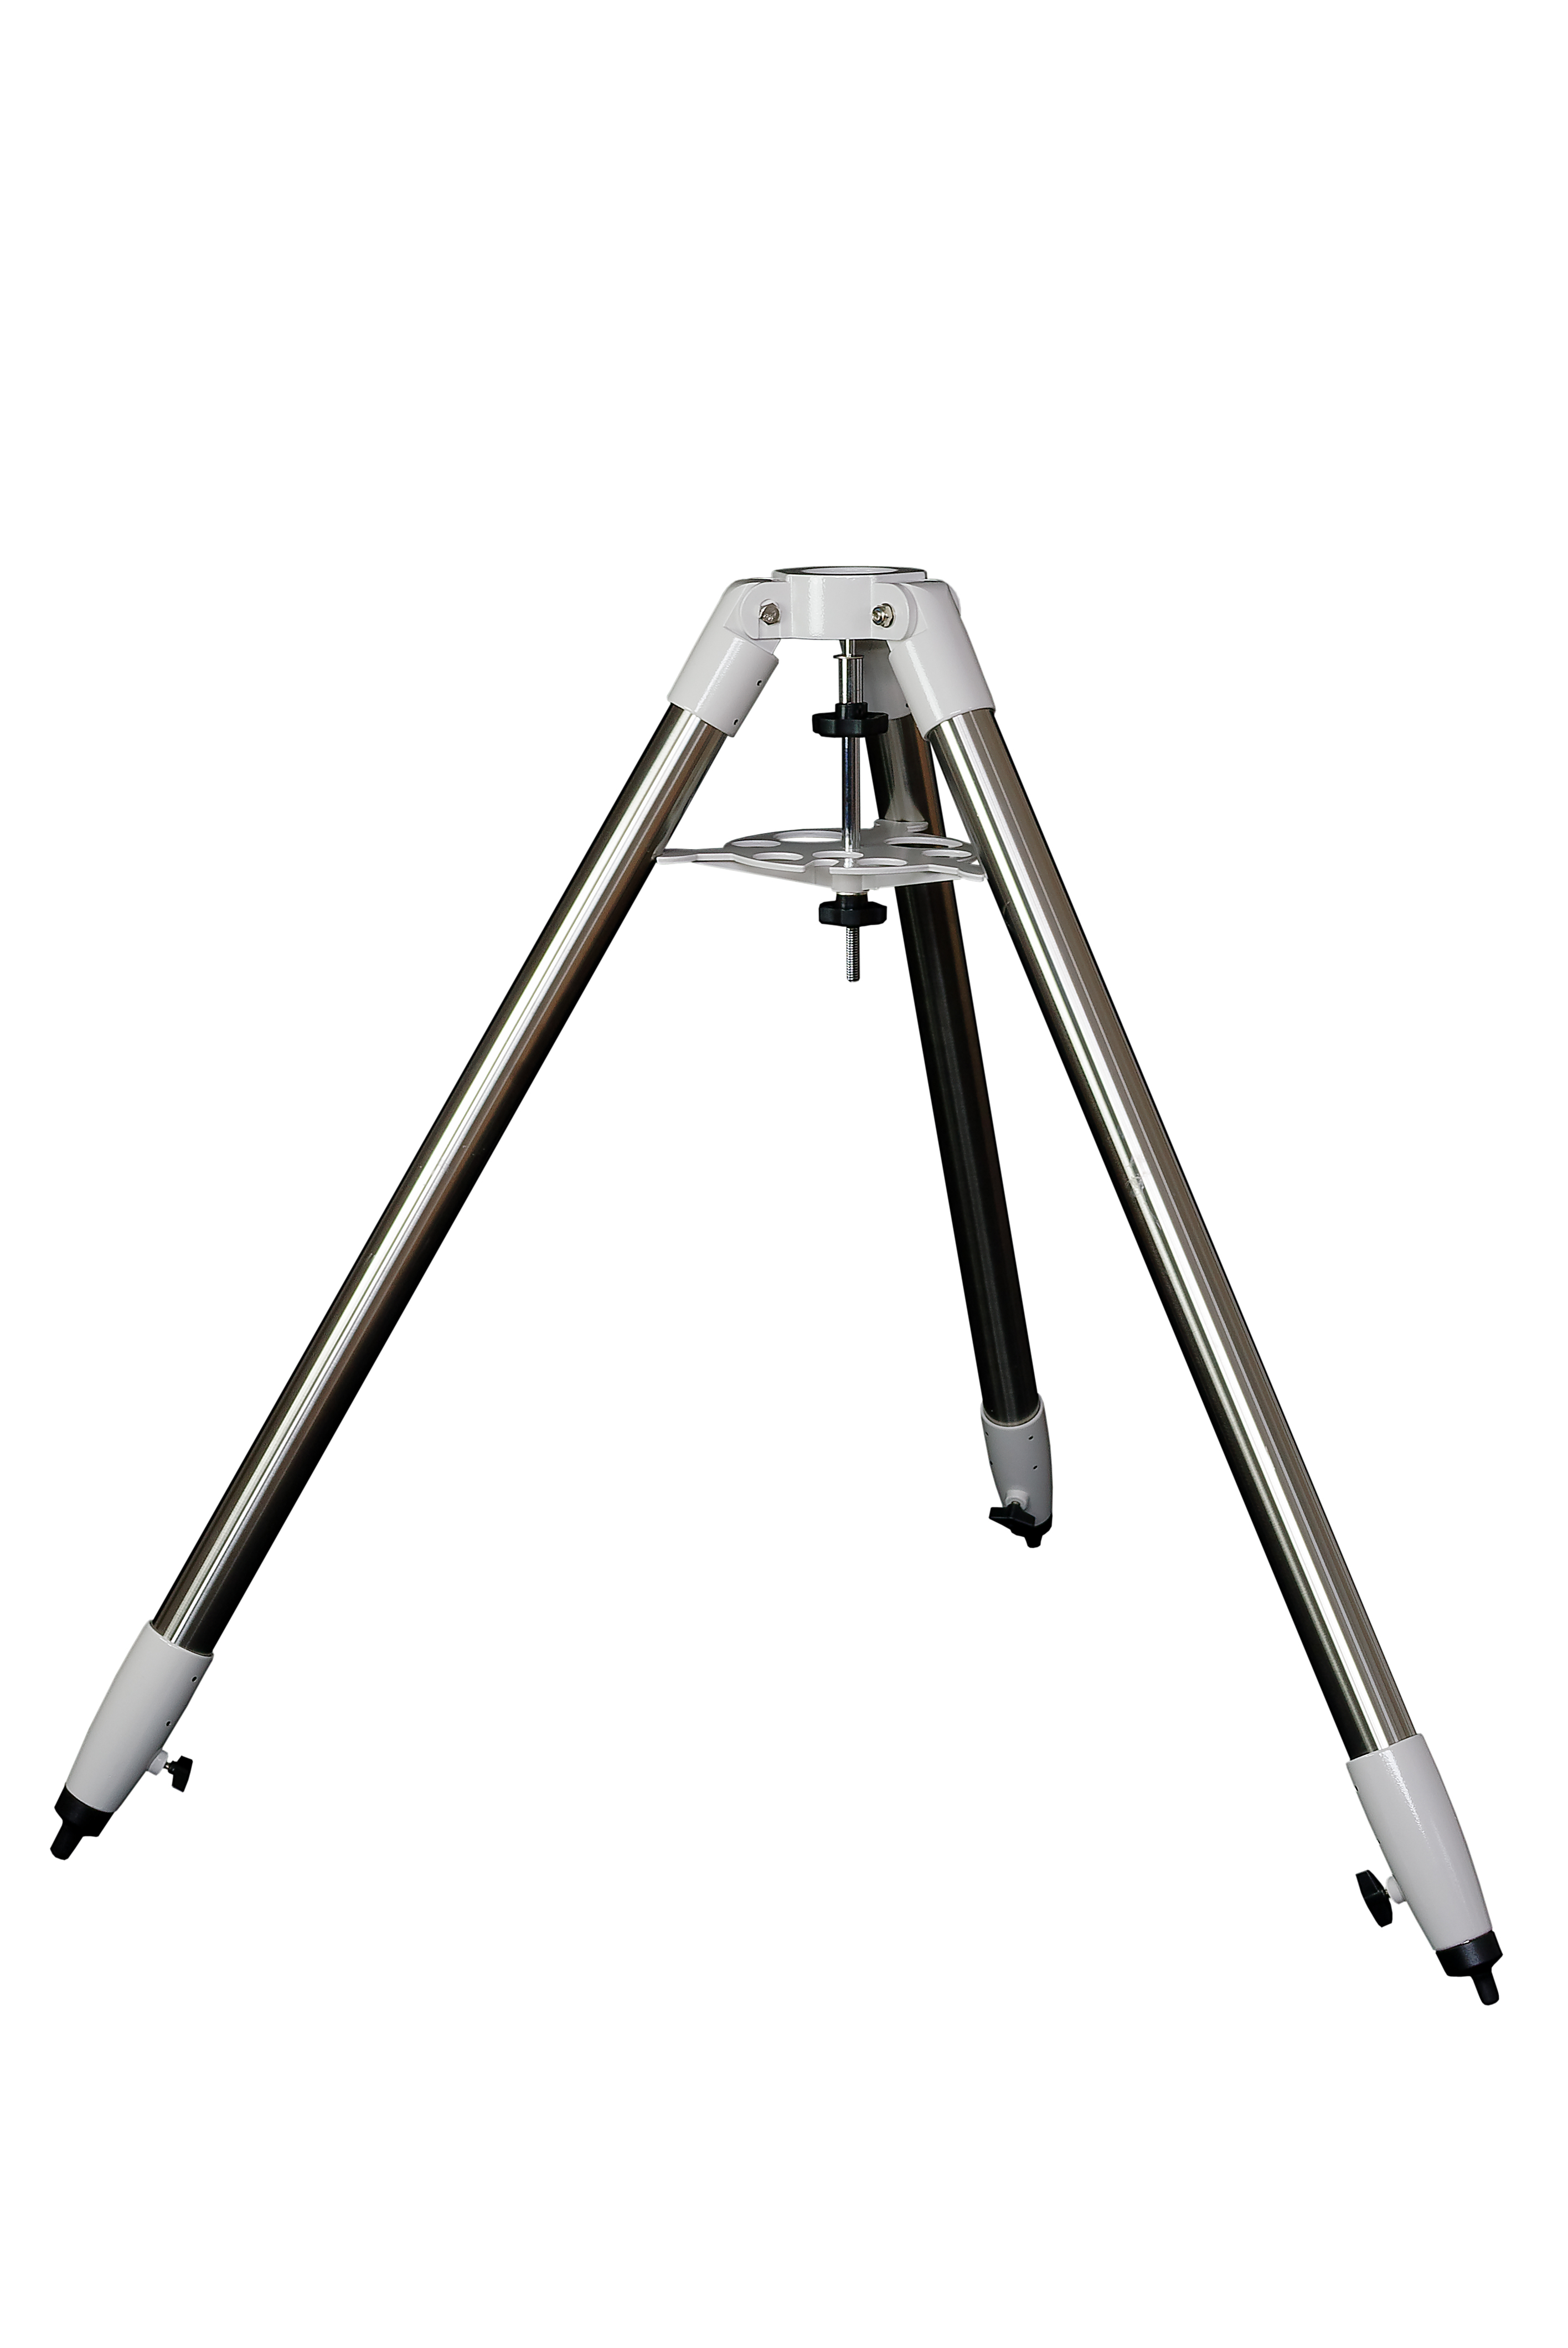 Sky-Watcher SKYMAX-127 VIRTUOSO GTi 127mm (5") f/11.8 WIFI GO-TO Skymax-127 Virtuoso Gti Tabletop Telescope